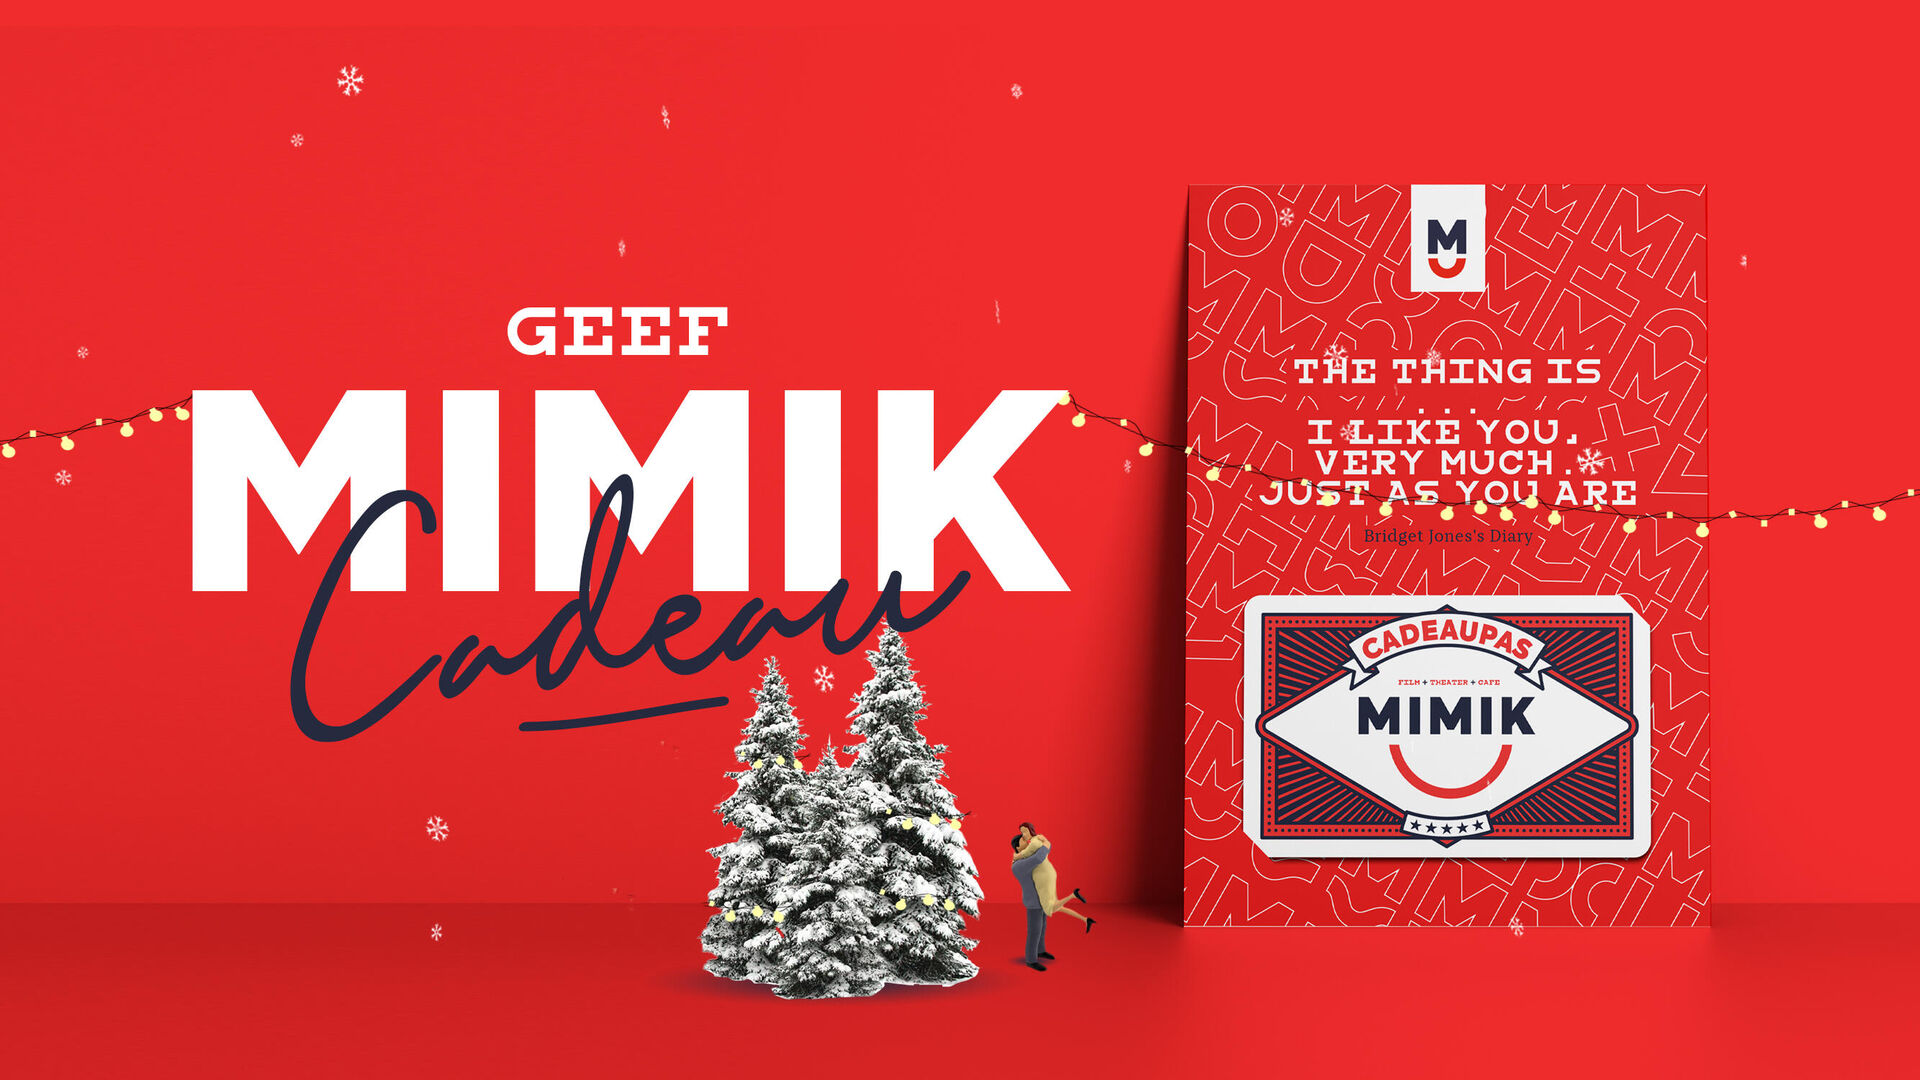 Geef MIMIK Cadeau